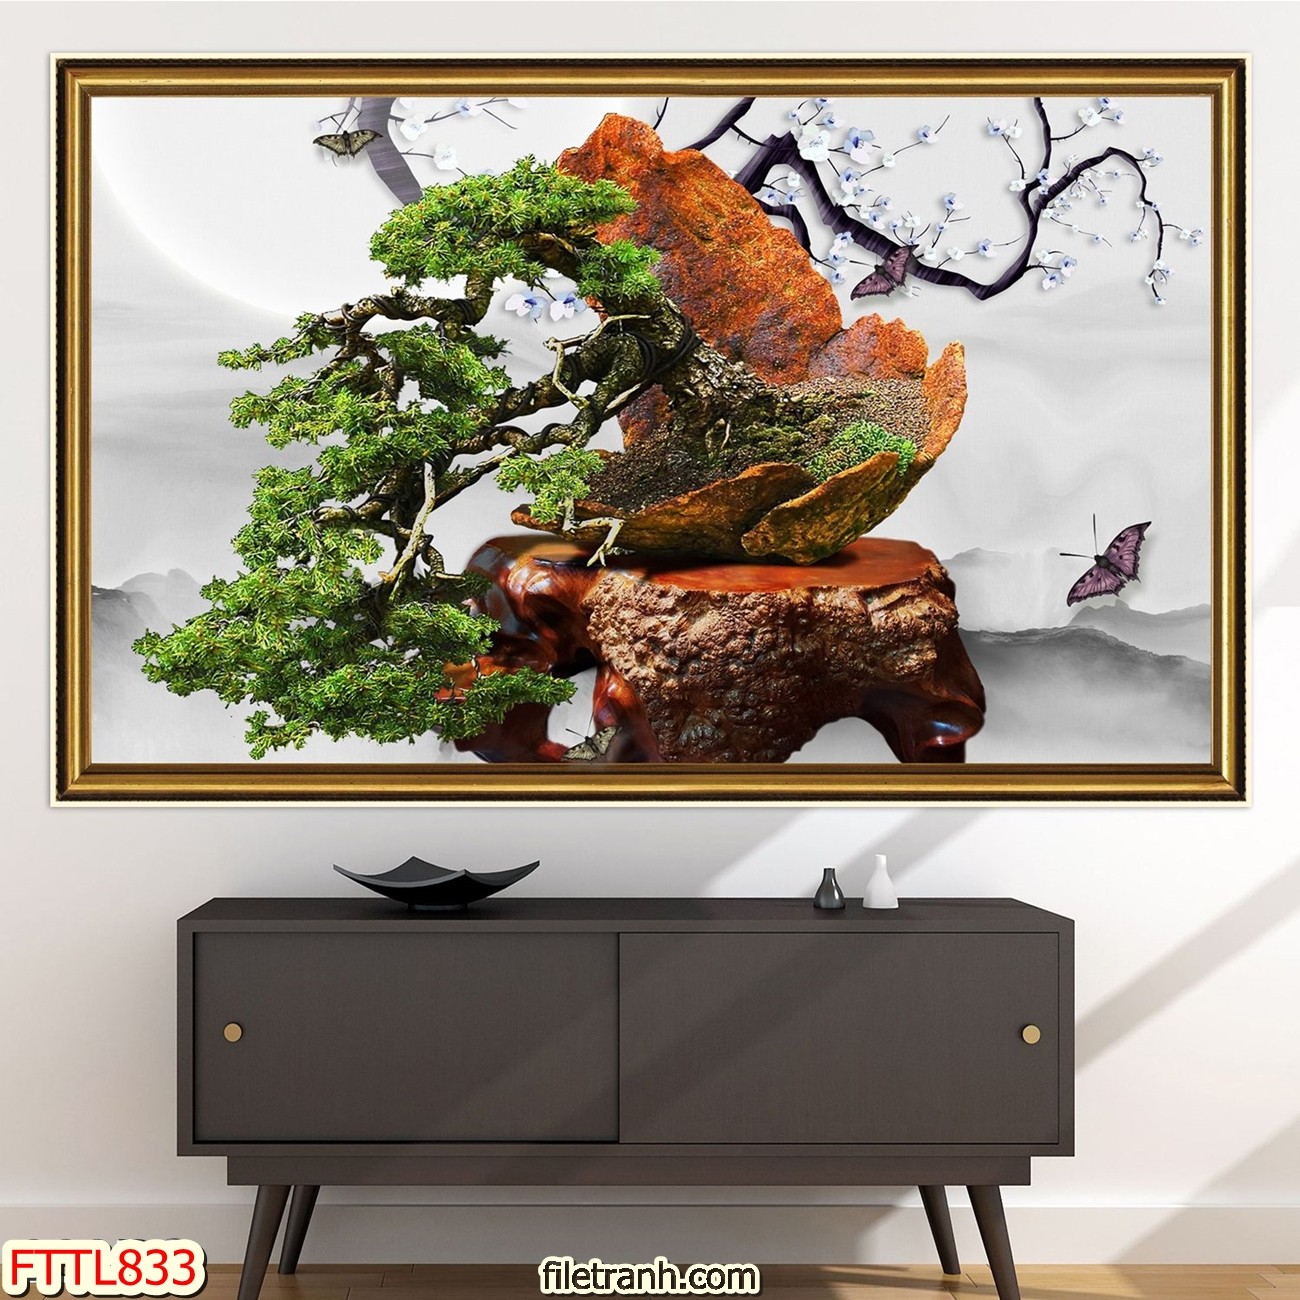 https://filetranh.com/file-tranh-chau-mai-bonsai/file-tranh-chau-mai-bonsai-fttl833.html